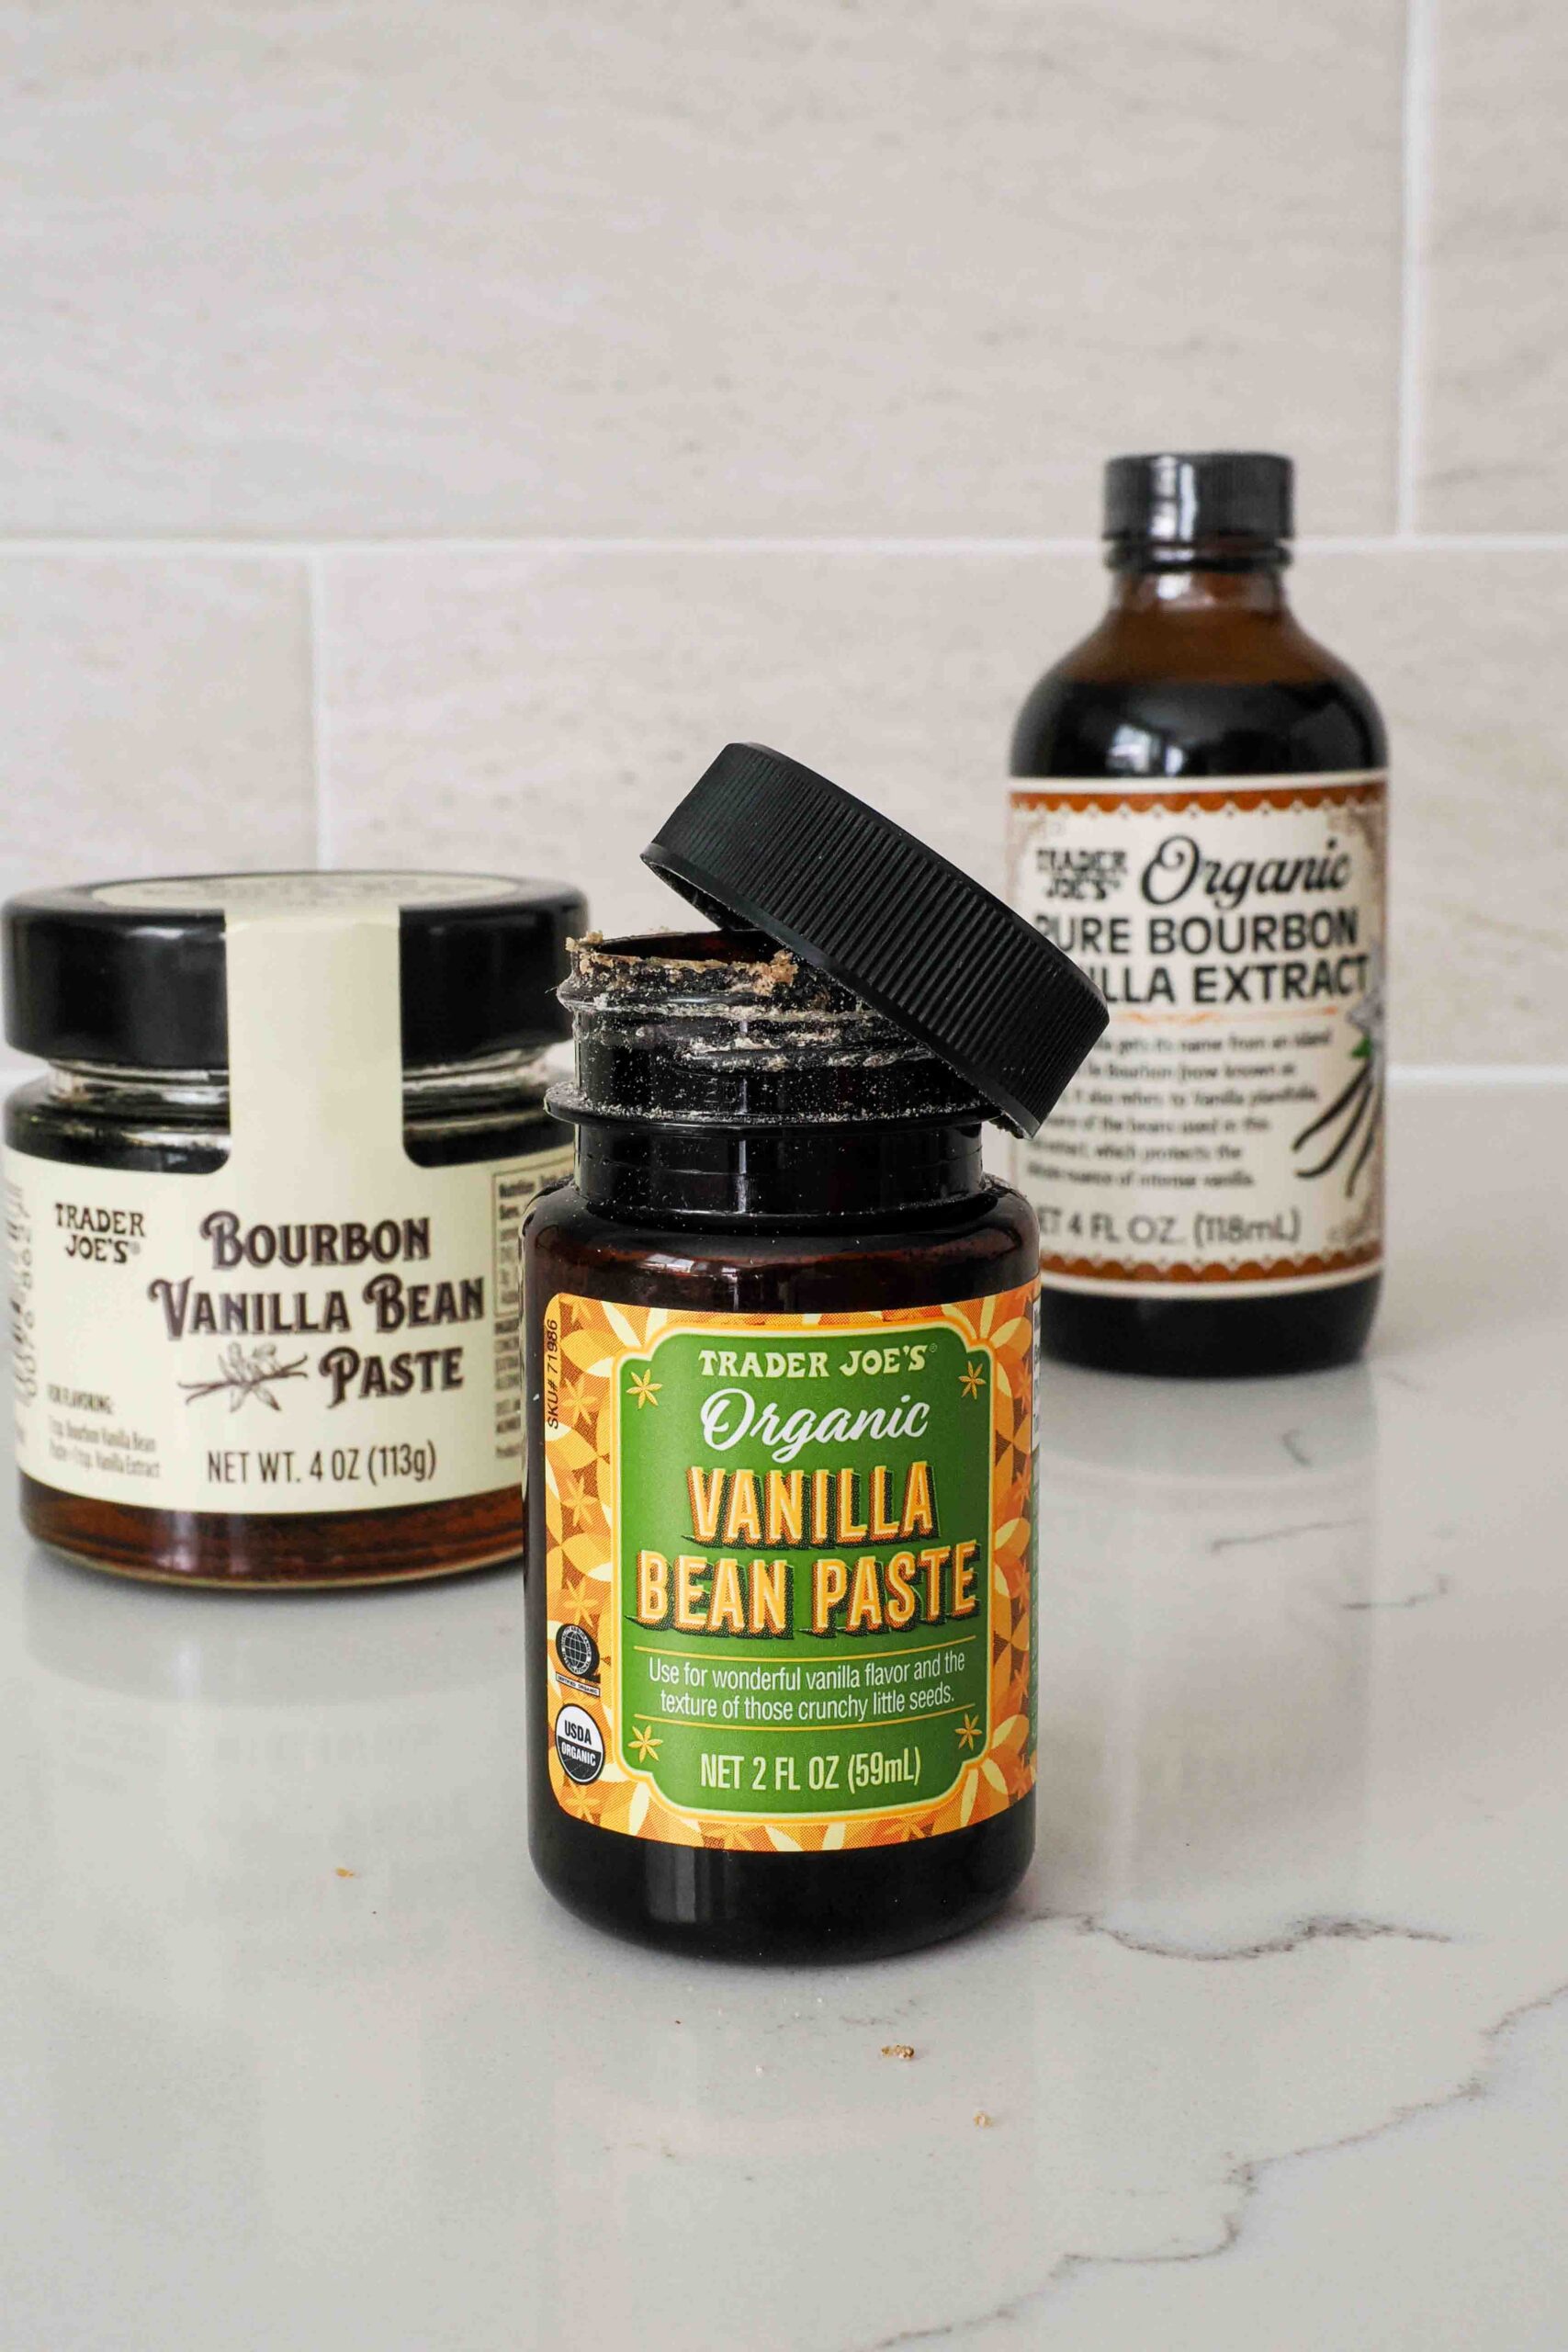 An opened jar of Trader Joe's organic vanilla bean paste with crystallization around the rim.